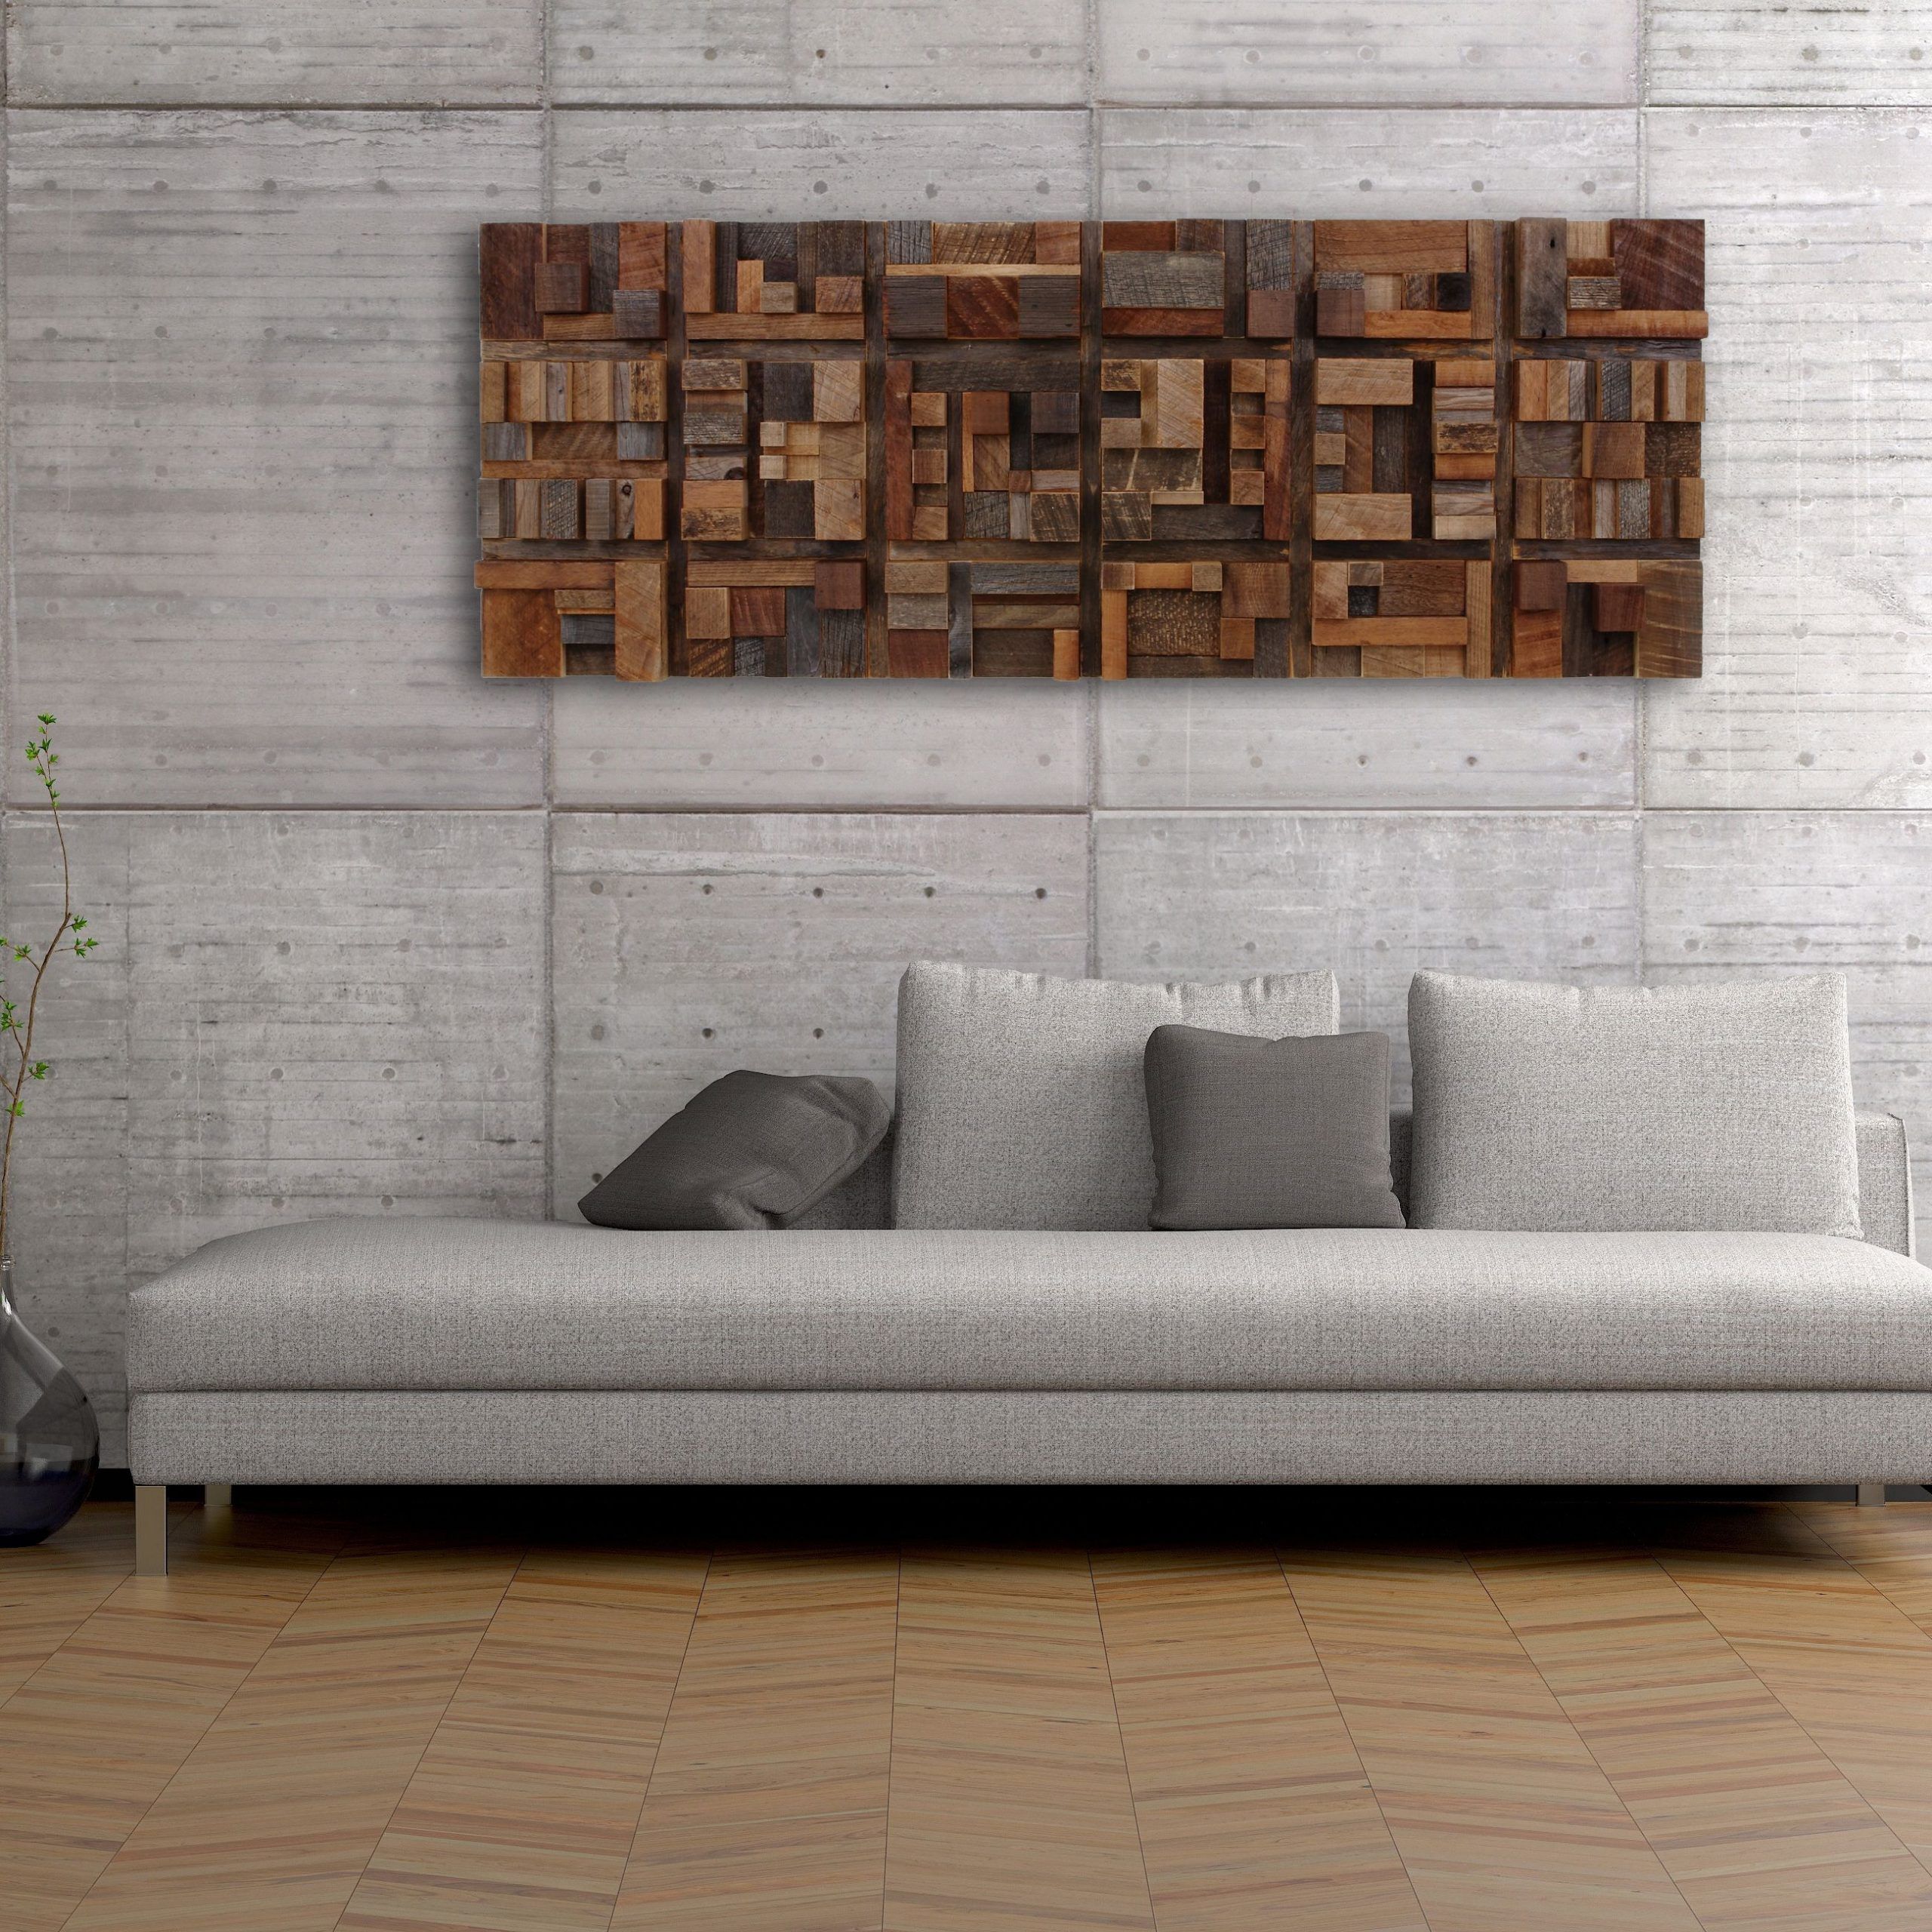 Handmade Wood Wall Art Of Geometric Shapes, Reclaimed Inside Newest Hexagons Wood Wall Art (View 15 of 20)